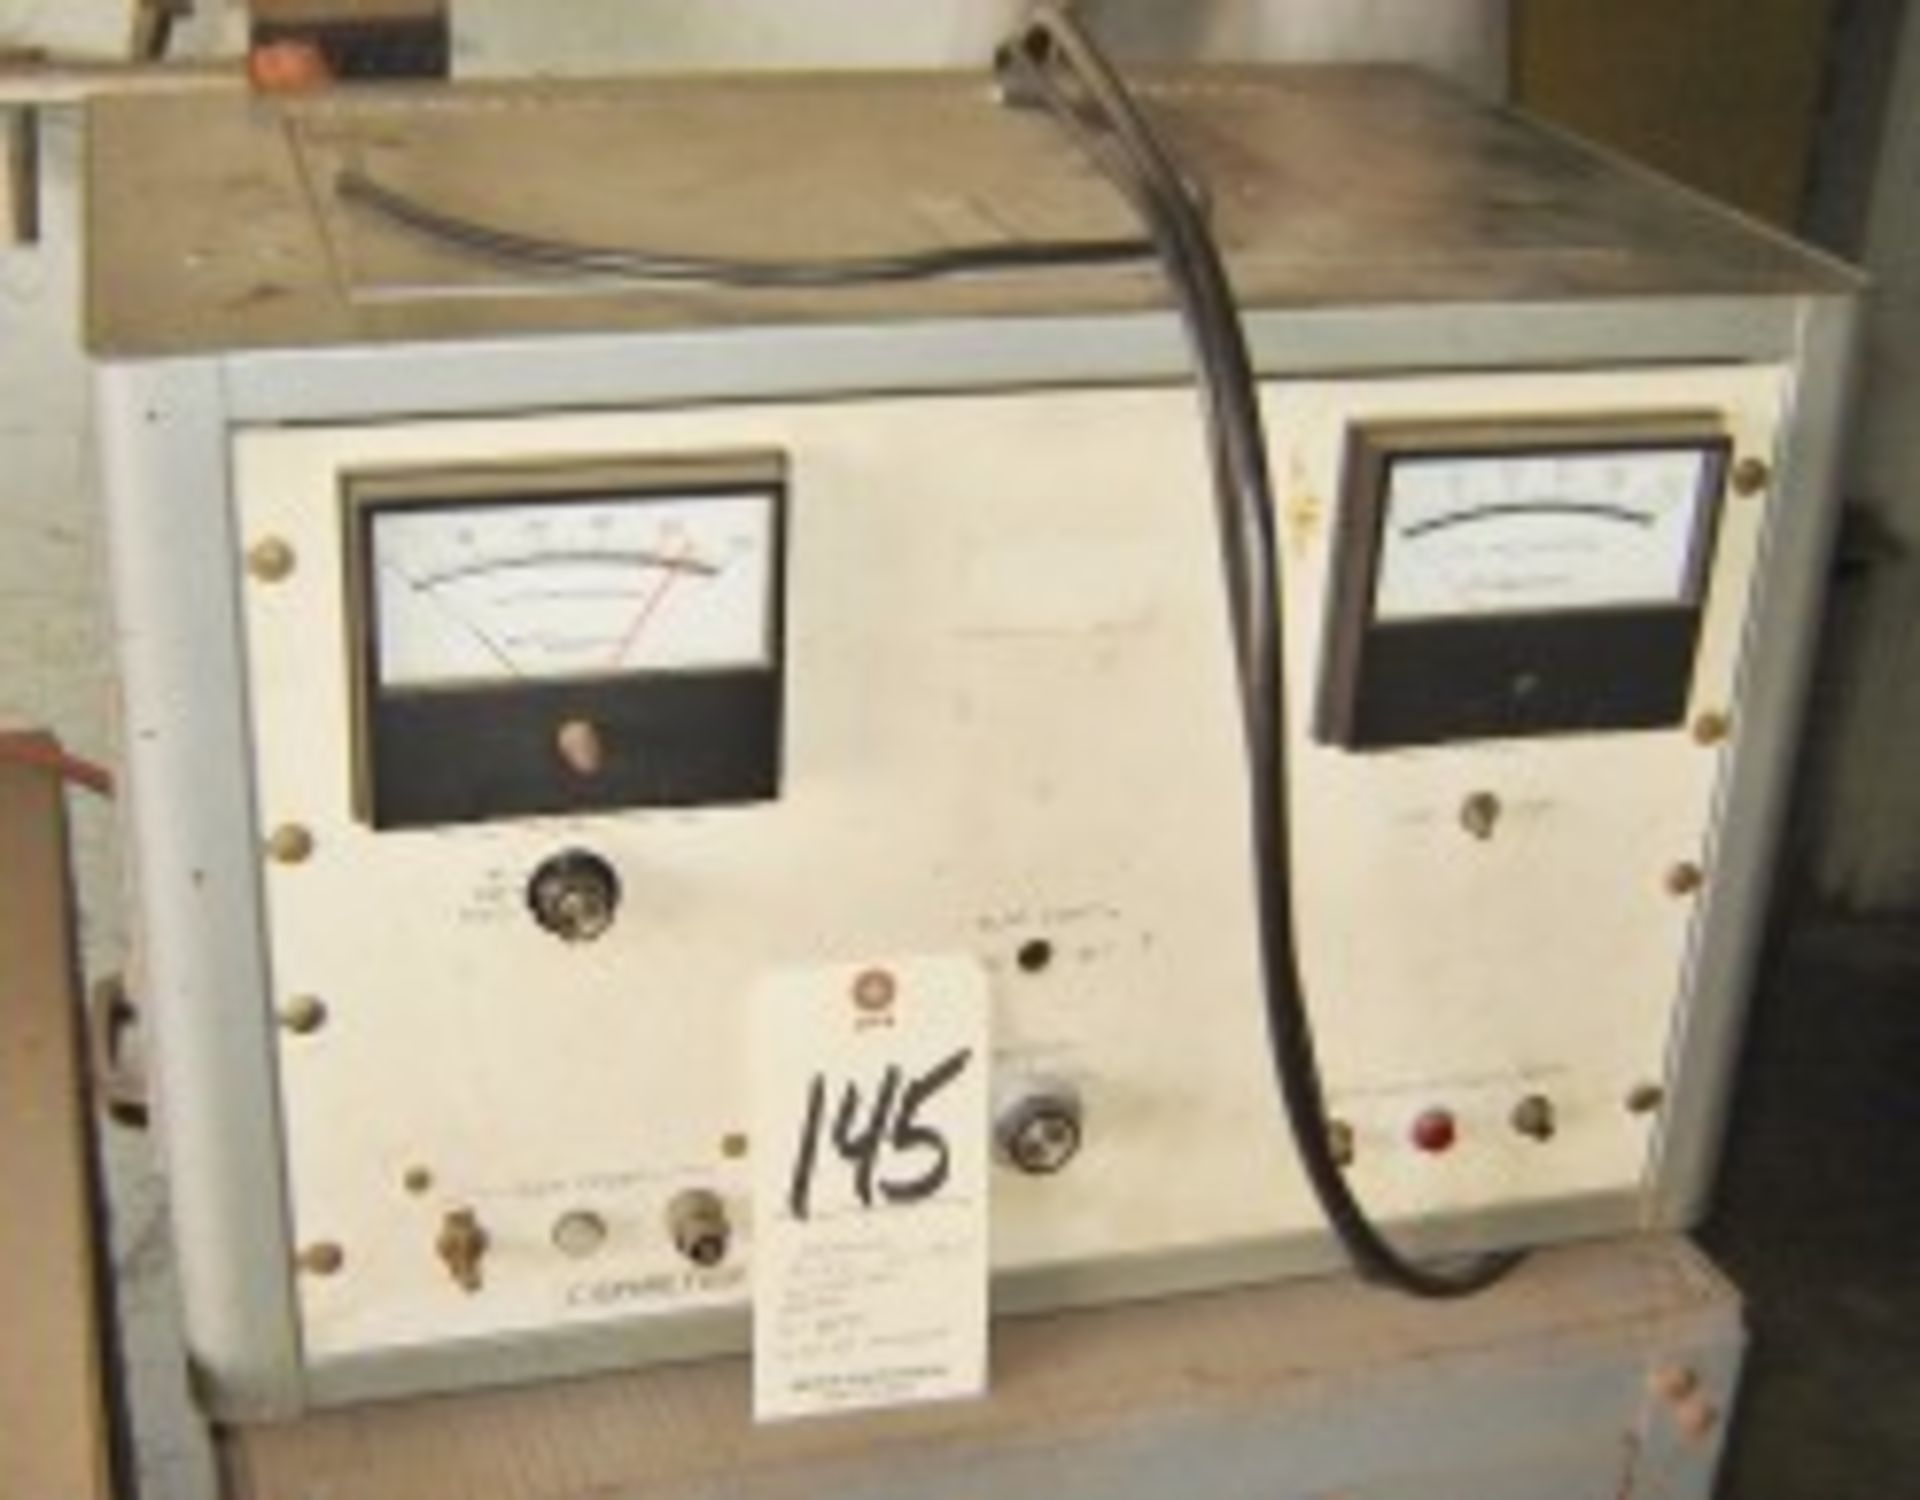 Peschel Model H-580 Hi Test Electriclal Tester - Image 2 of 3